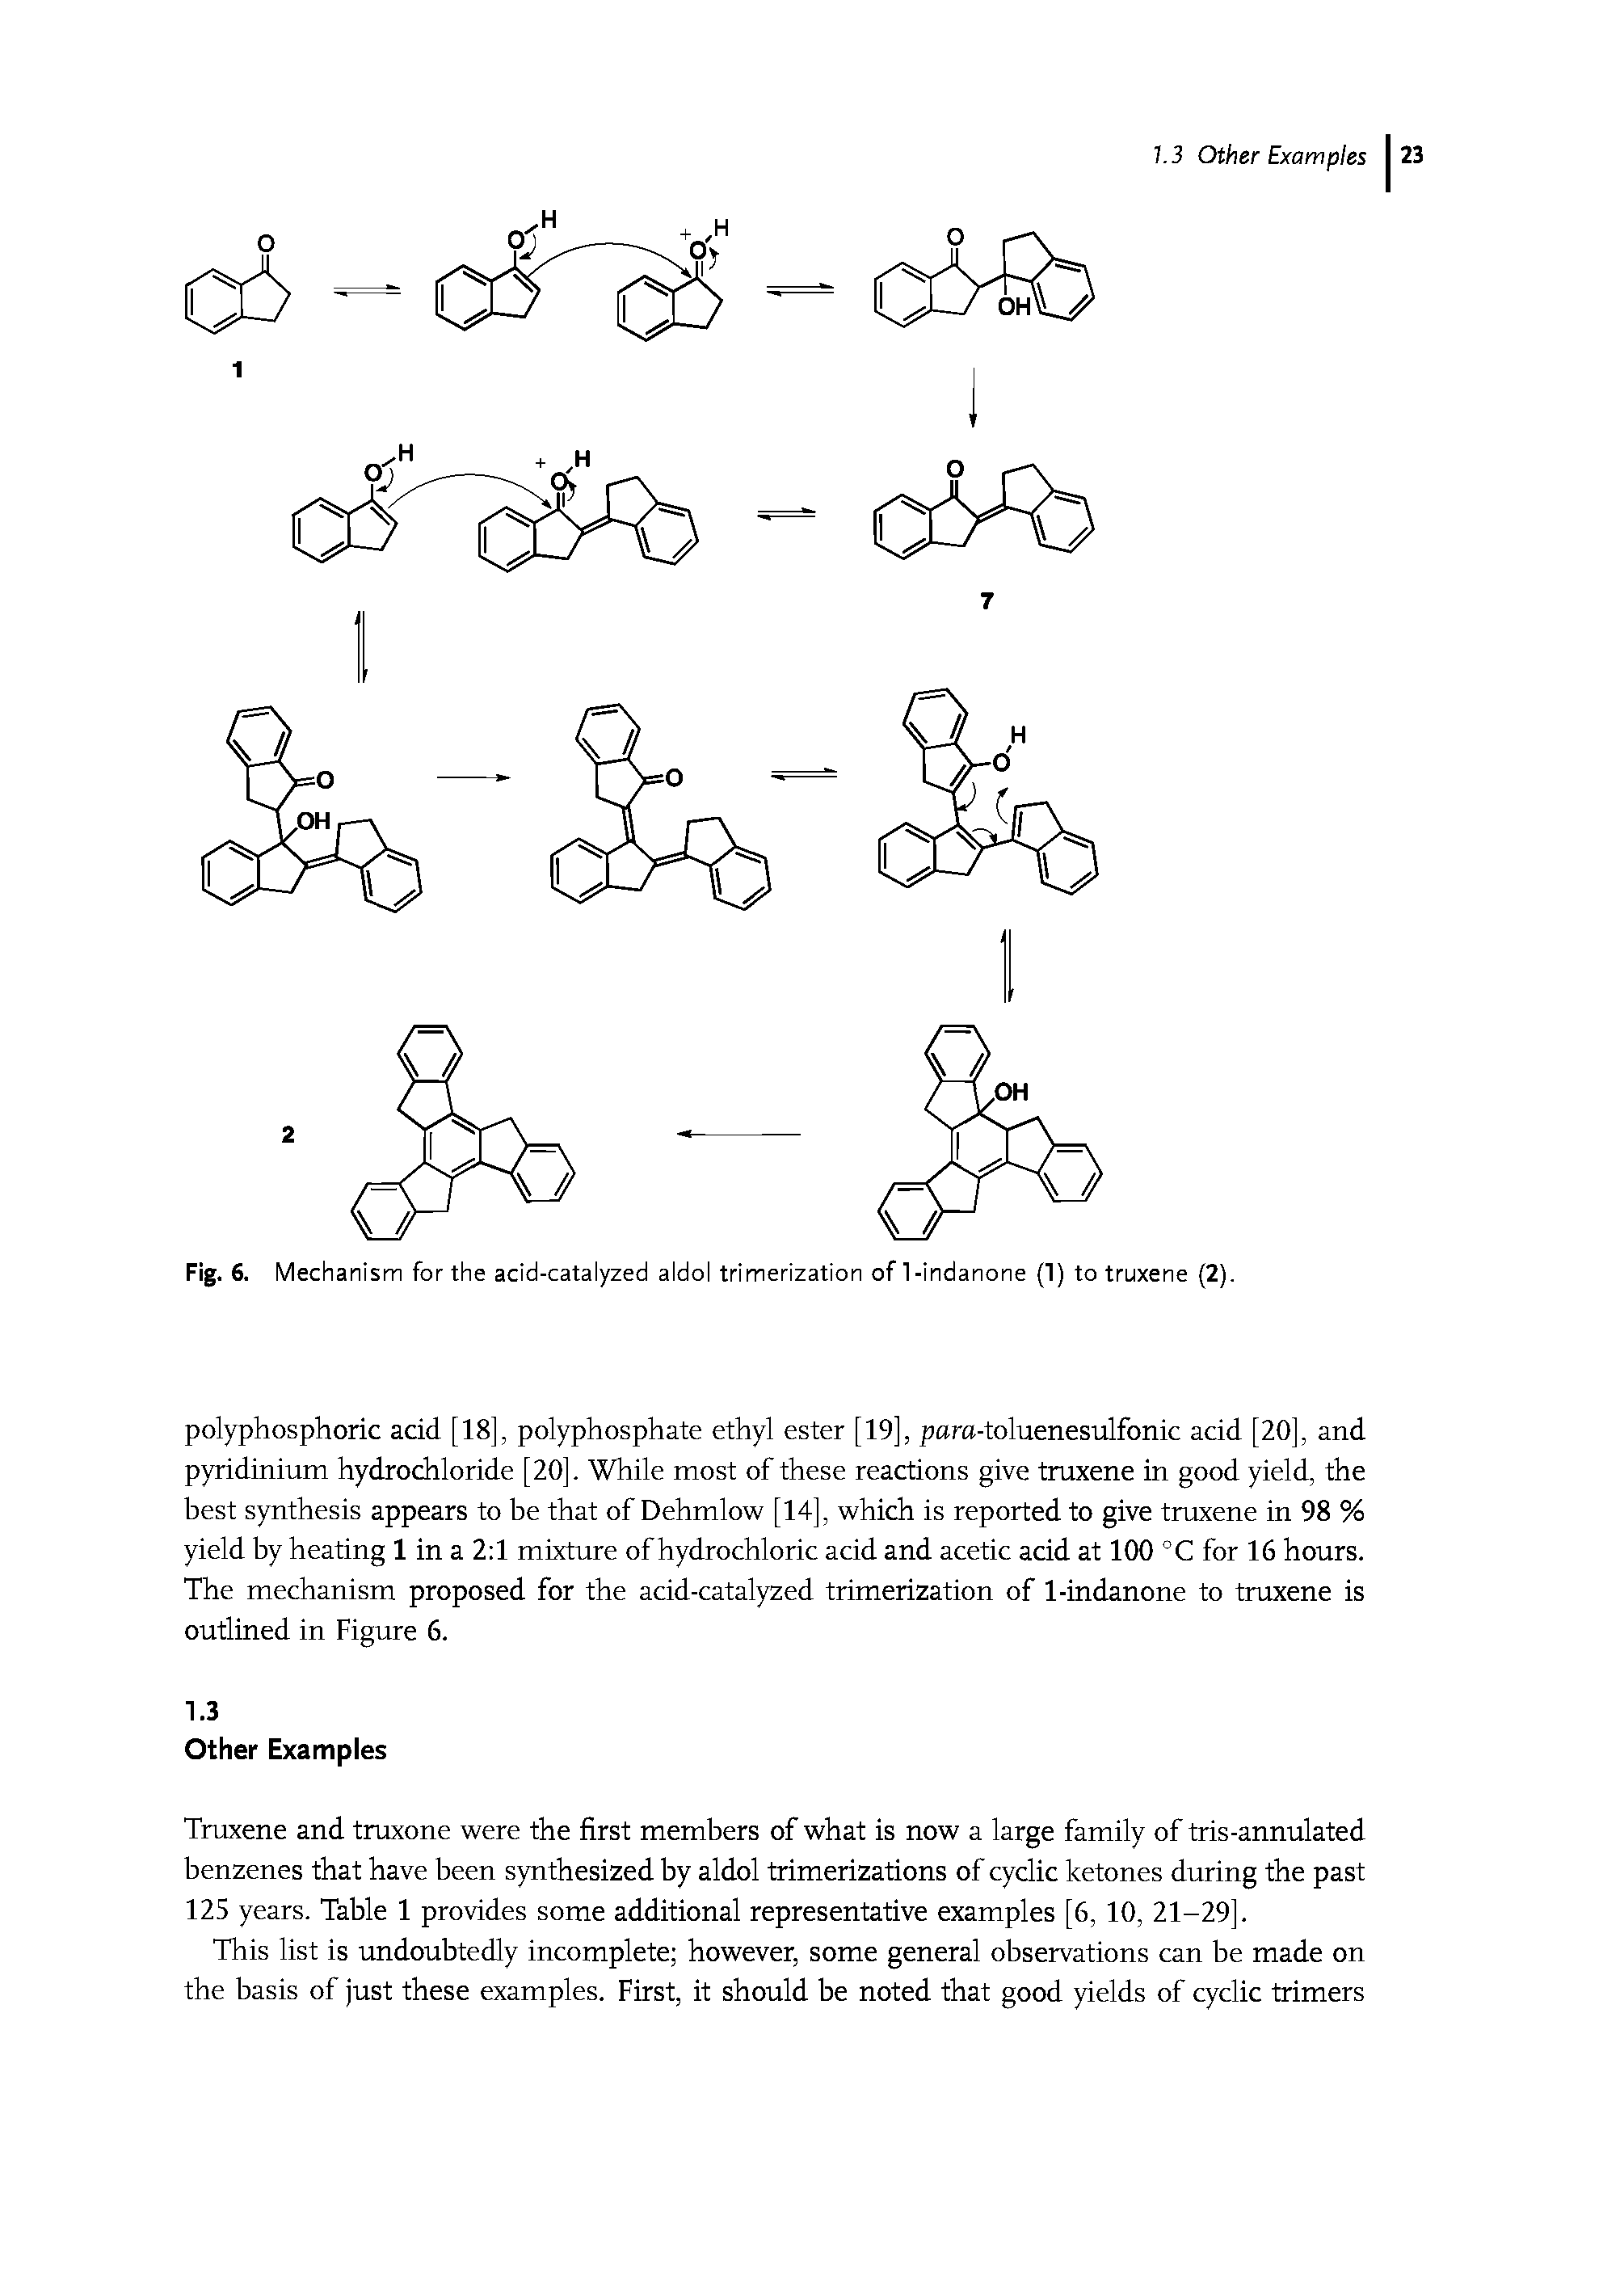 Fig. 6. Mechanism for the acid-catalyzed aldol trimerization ofl-indanone (1) to truxene (2).